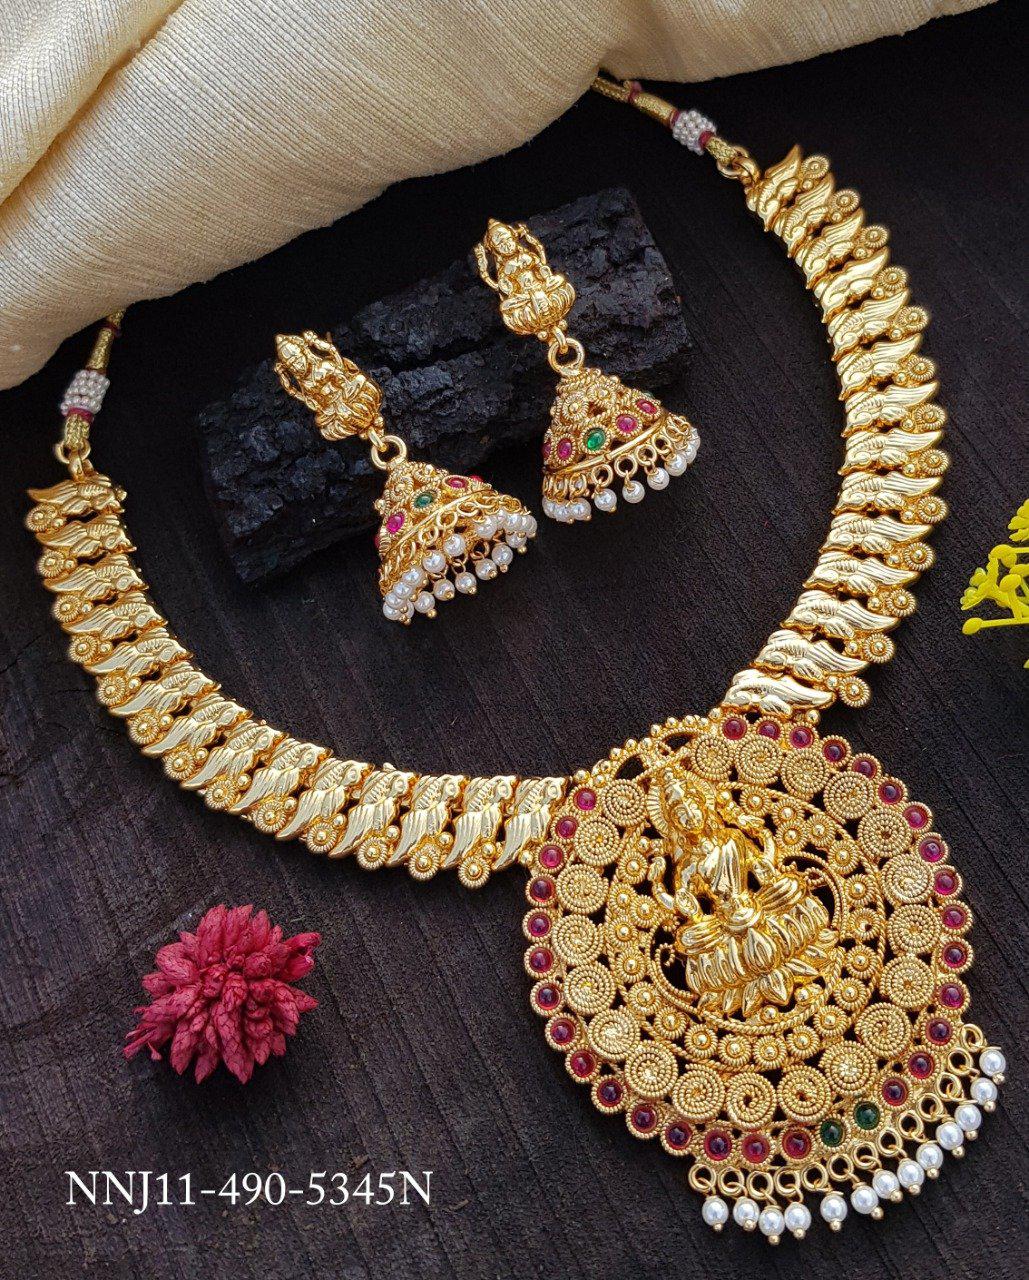 Premium Gold Finish Laxmi Short Necklace set with CZ stones 5345N